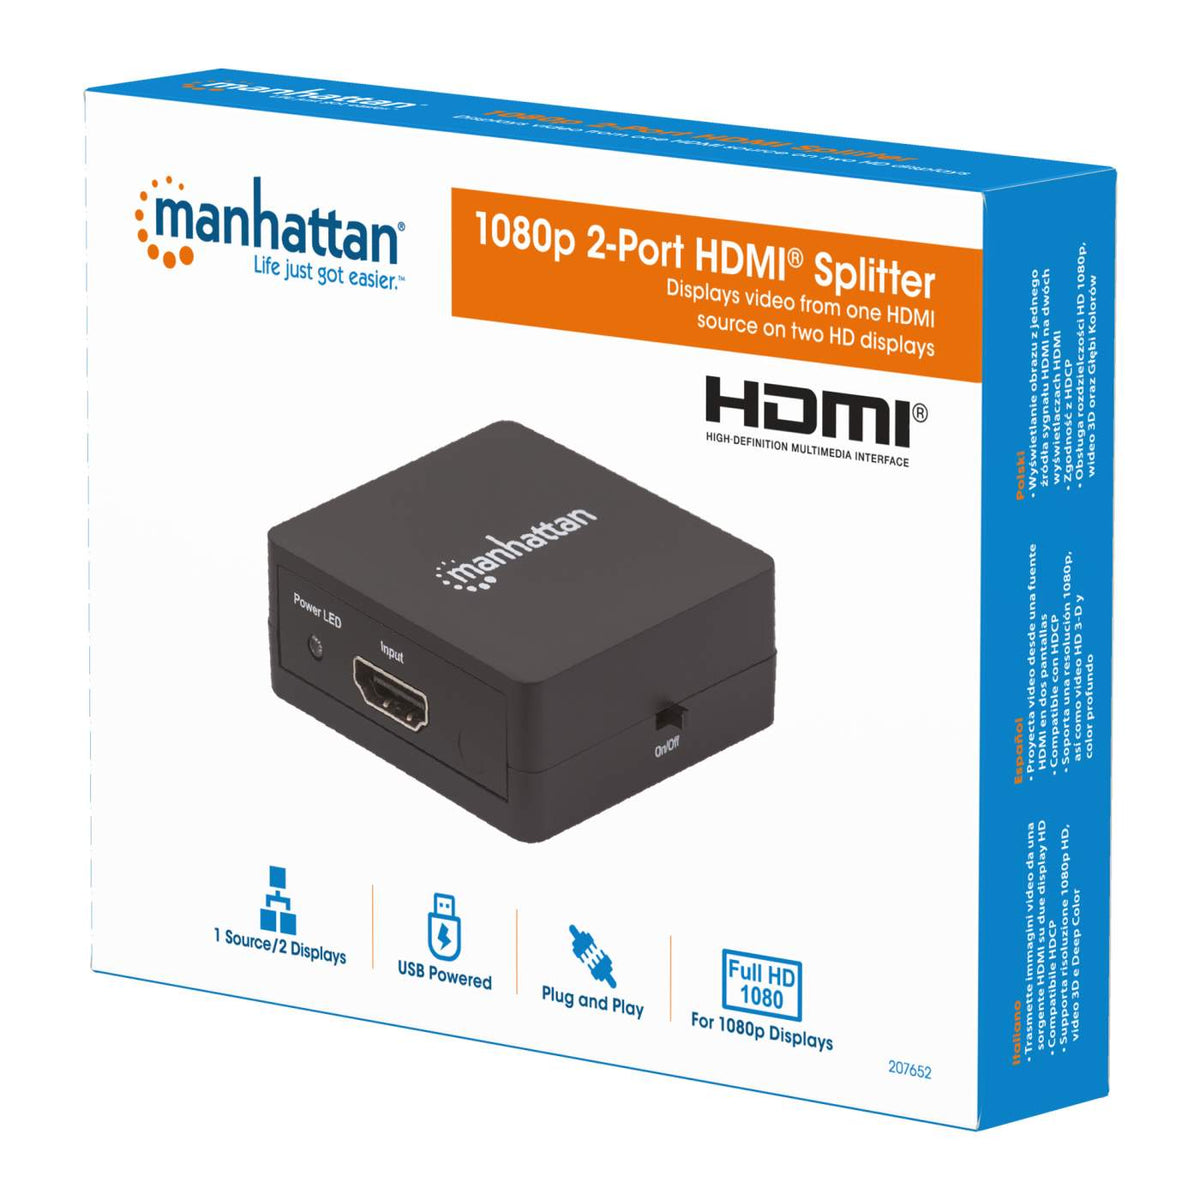 HDMI Video Splitter